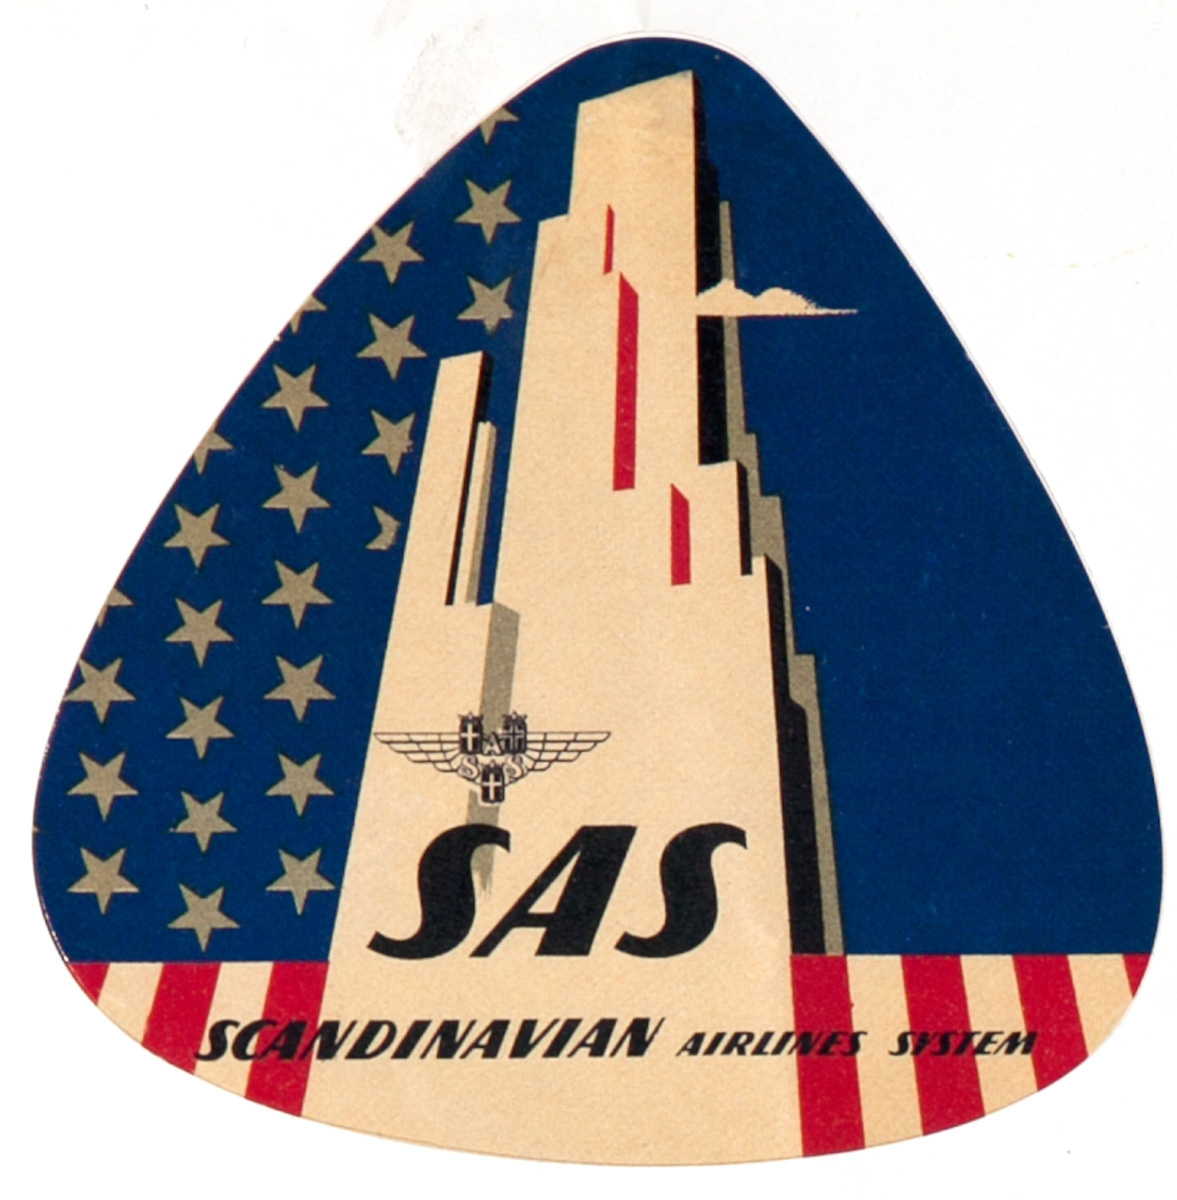 SAS Scandinavian Airlines System, USA Buildings Original Luggage Labels